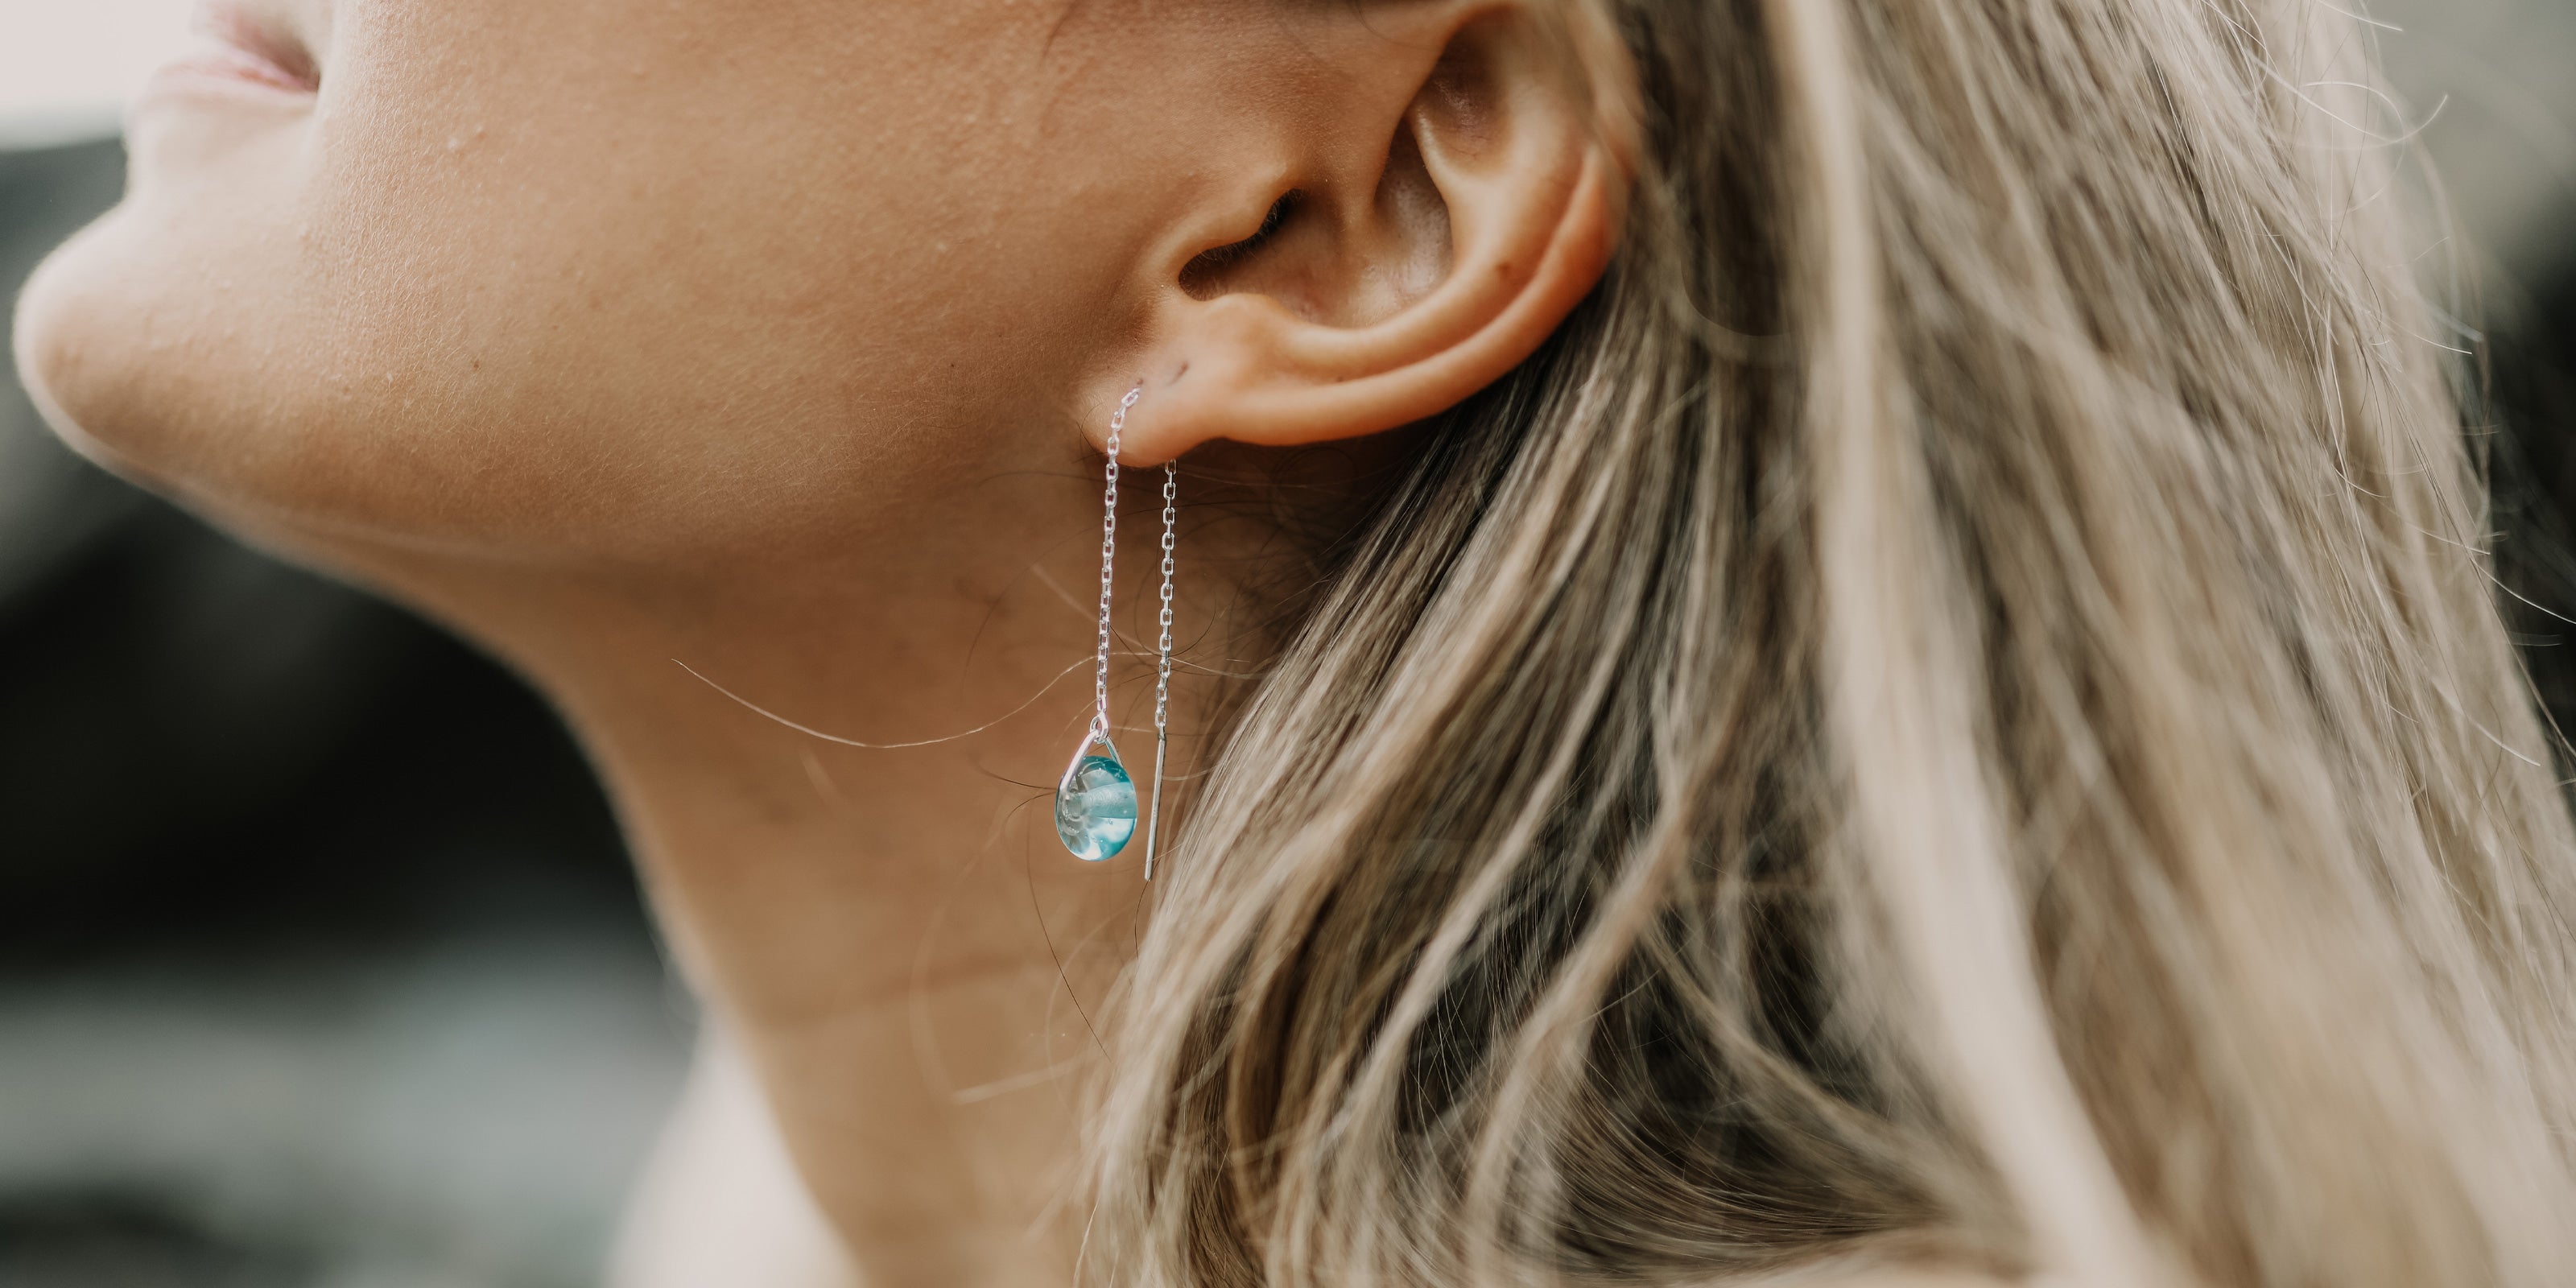 Mint glass beads on silver thread through earrings.